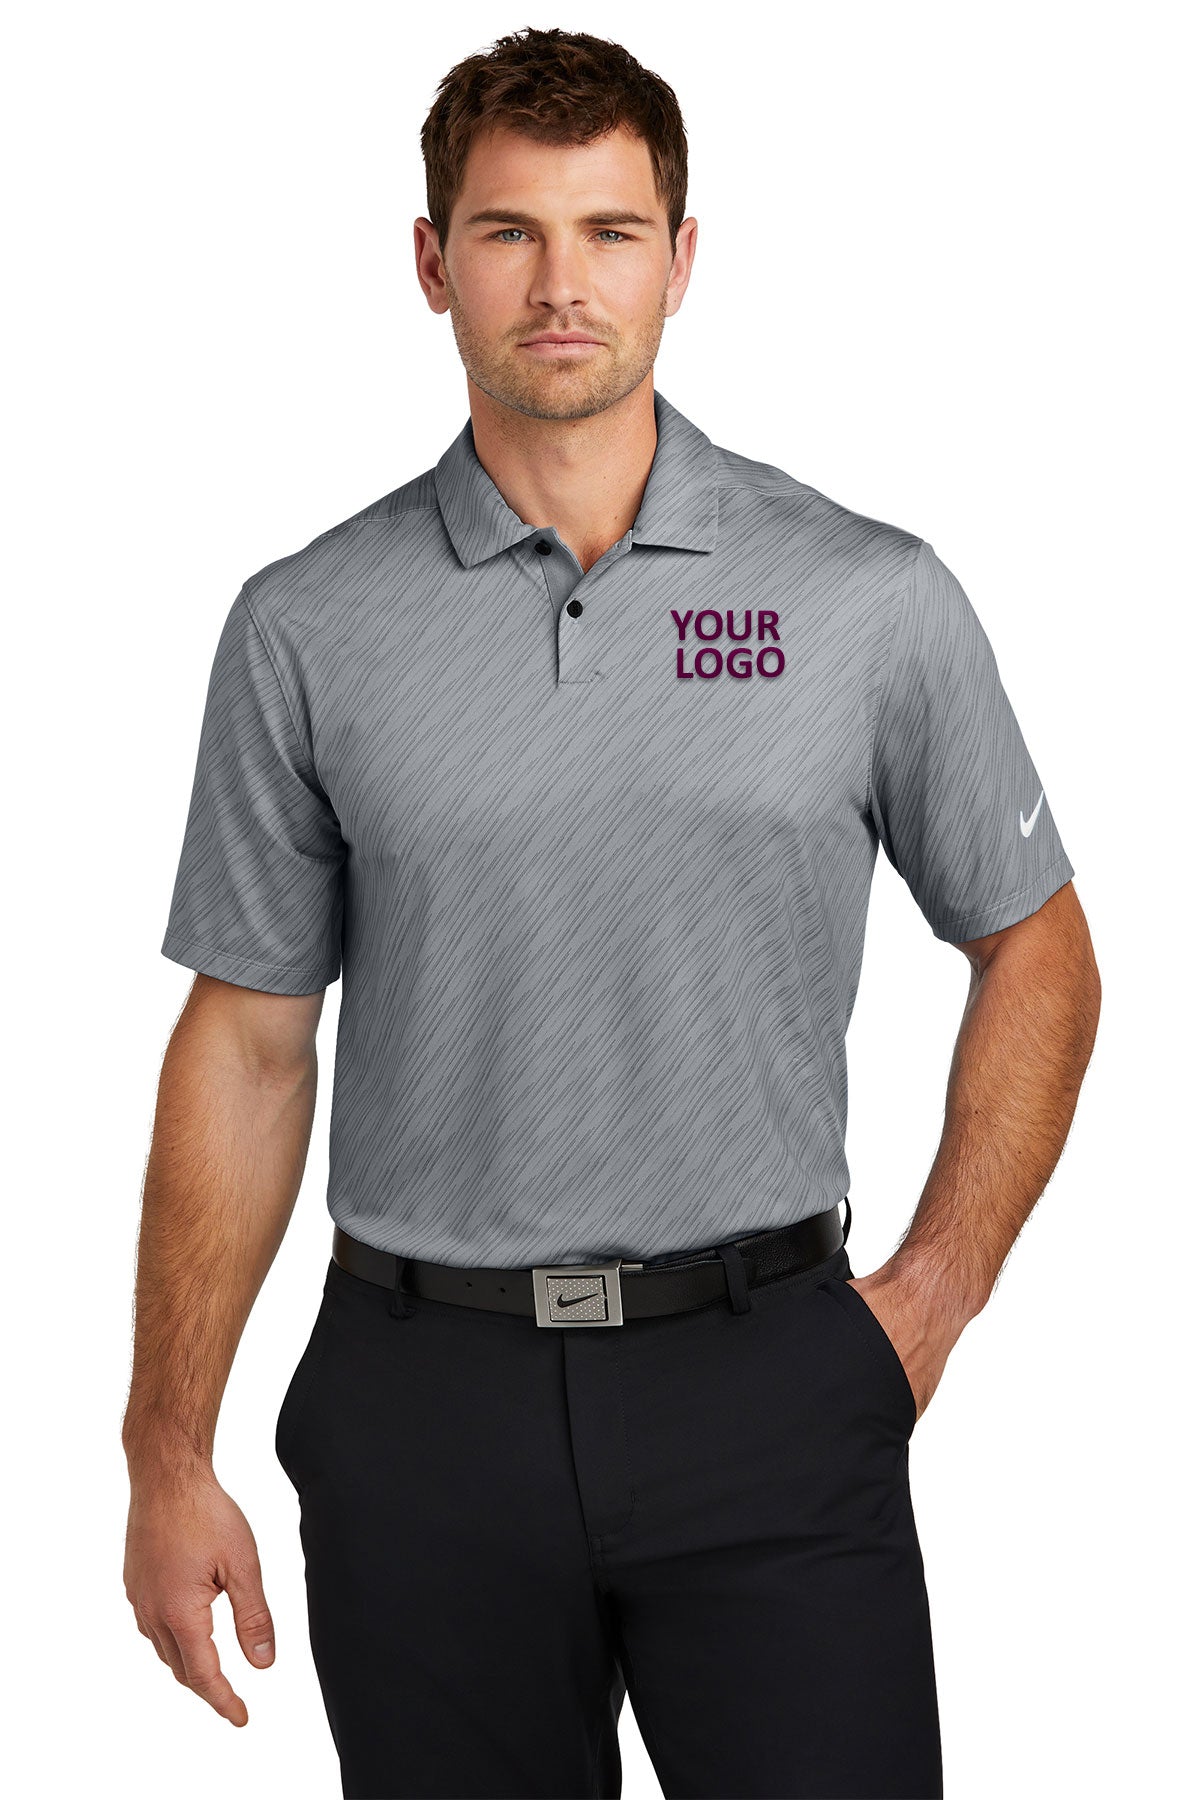 Nike Cool Grey NKDX6688 custom polo shirts with logo